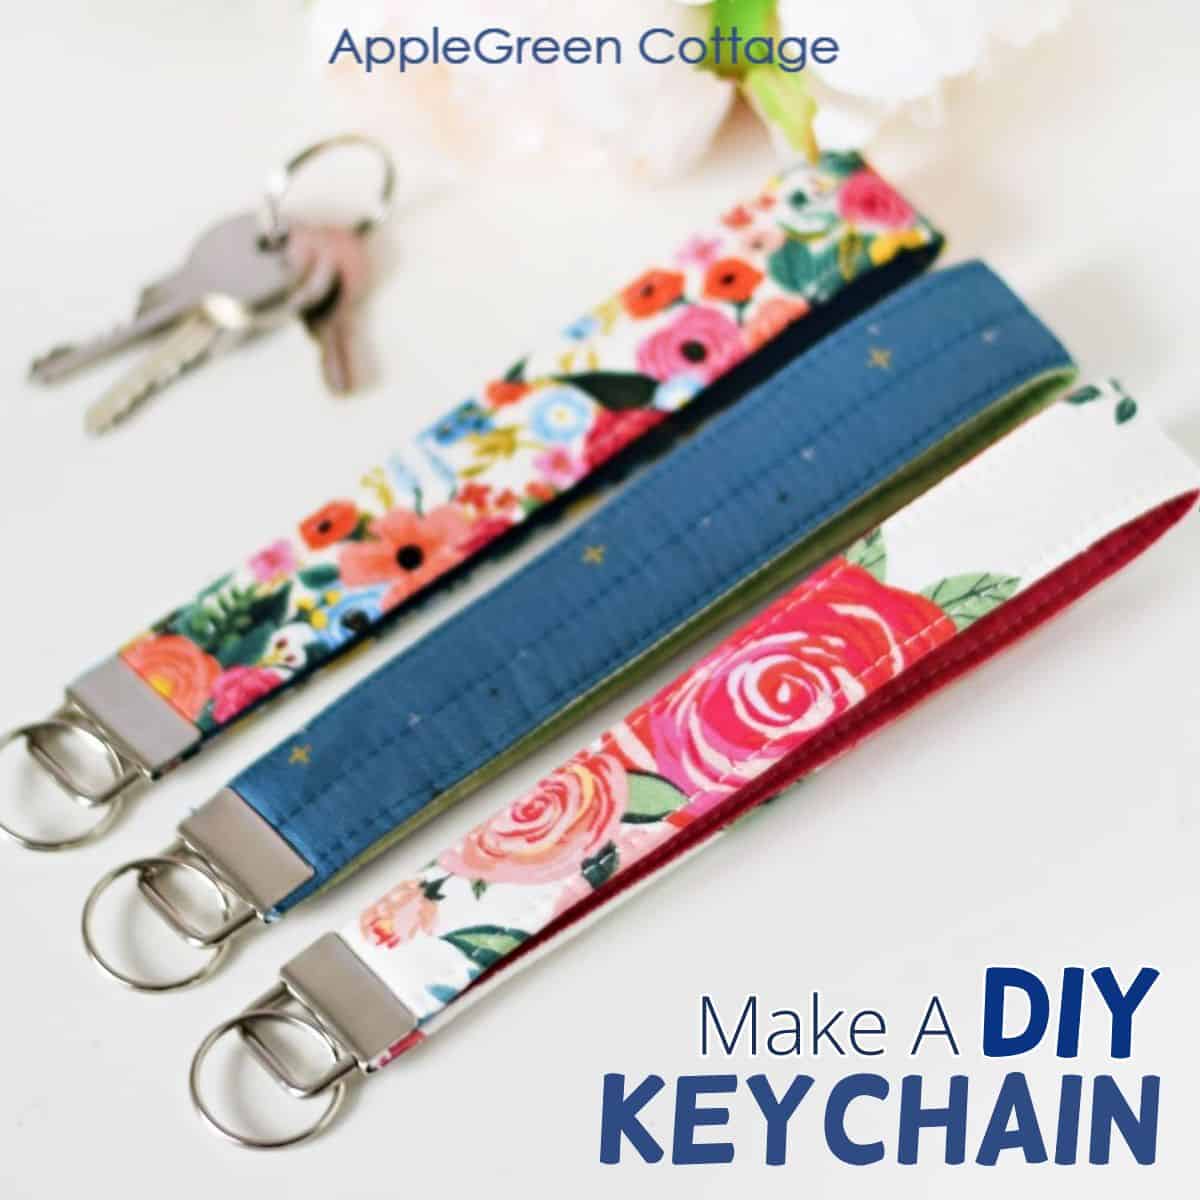 How to Make a Keychain - AppleGreen Cottage